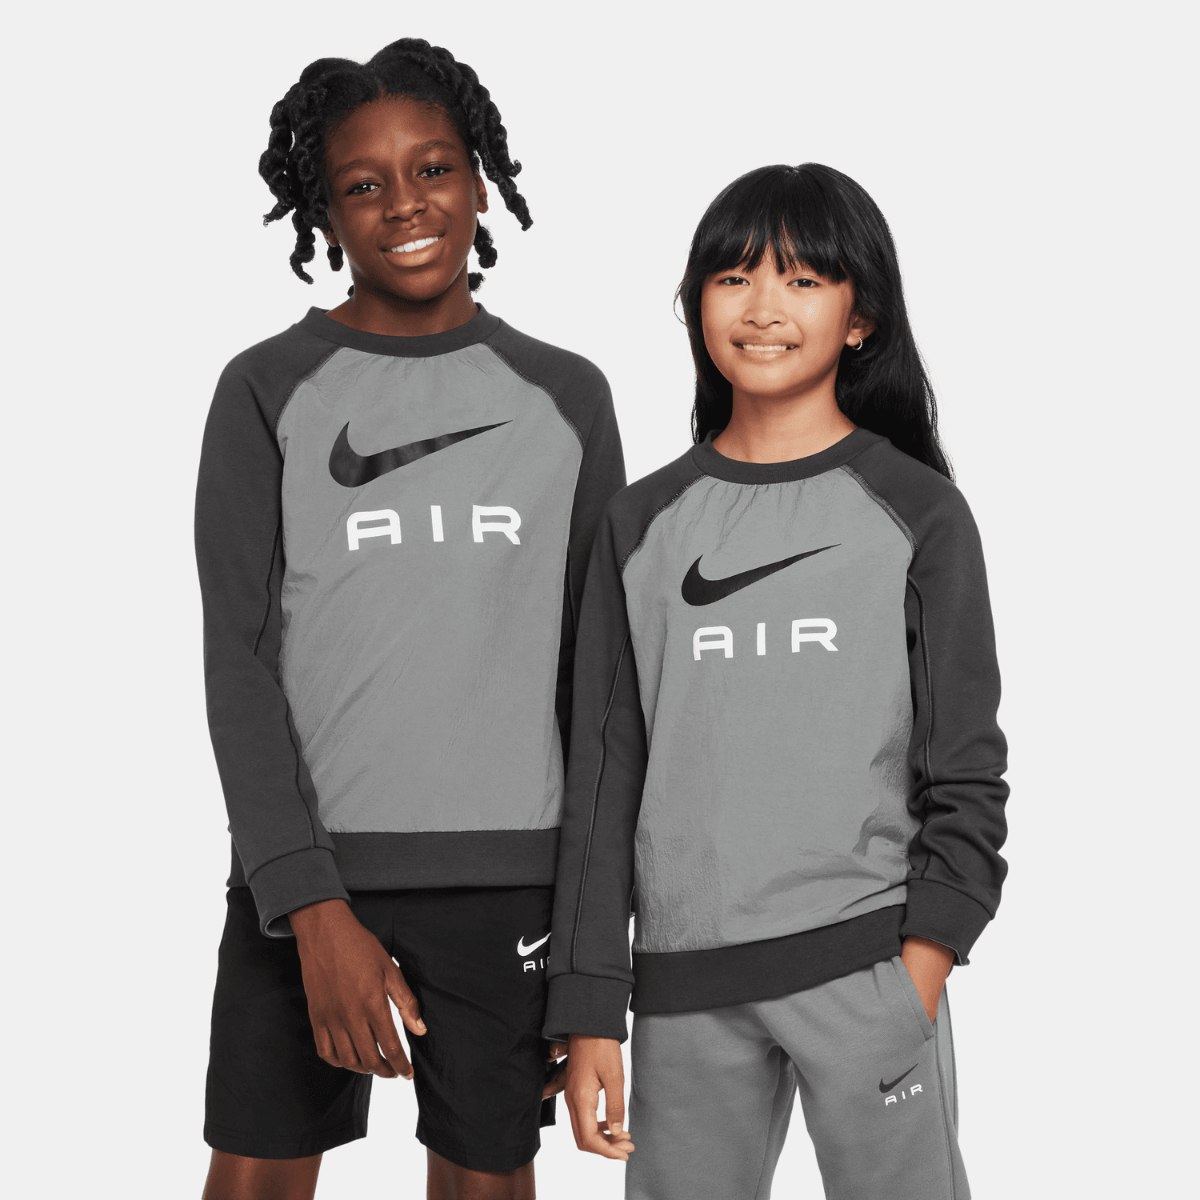 T-Shirt Nike Air Enfant - Noir/Blanc – Footkorner